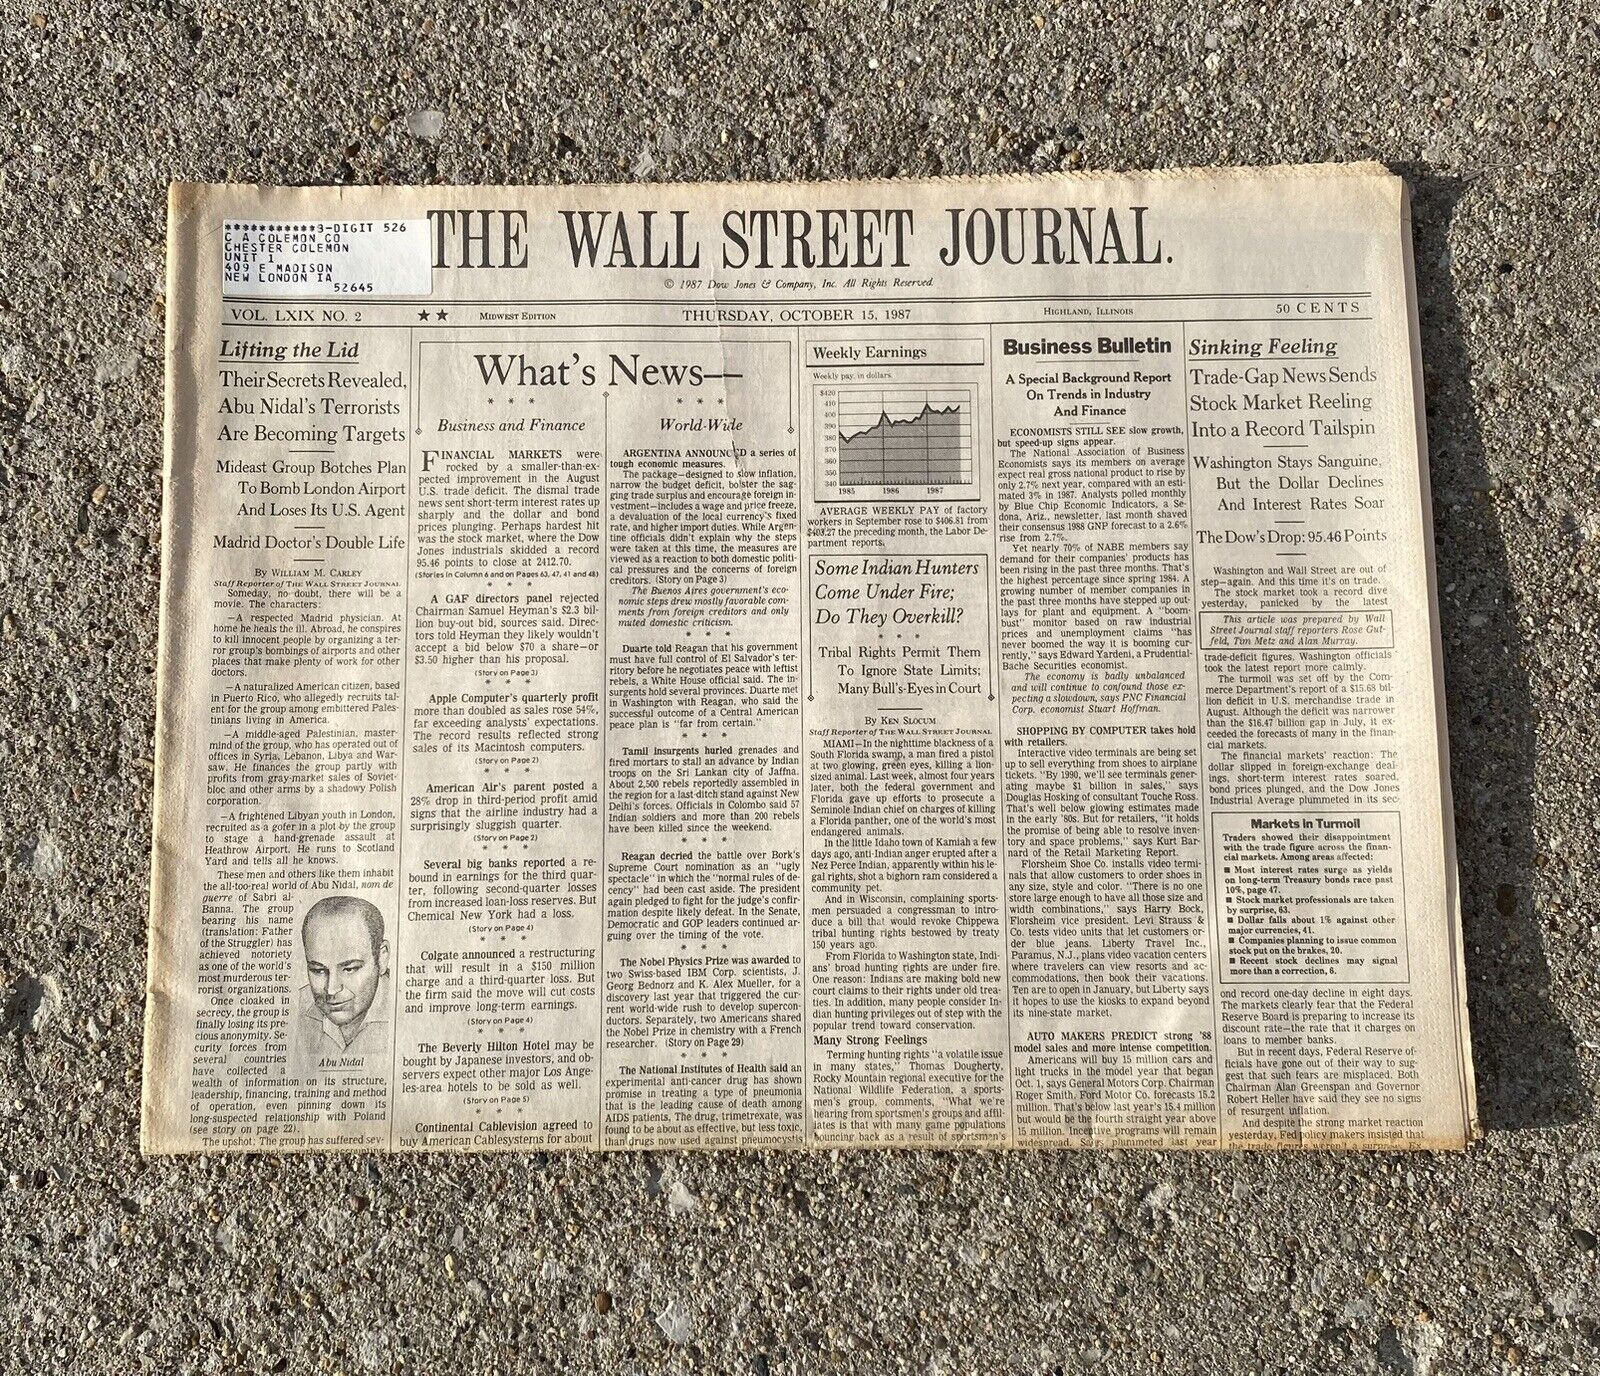 Wall Street Journal Newspaper Black Monday Stock Market Crash, October 15 1987